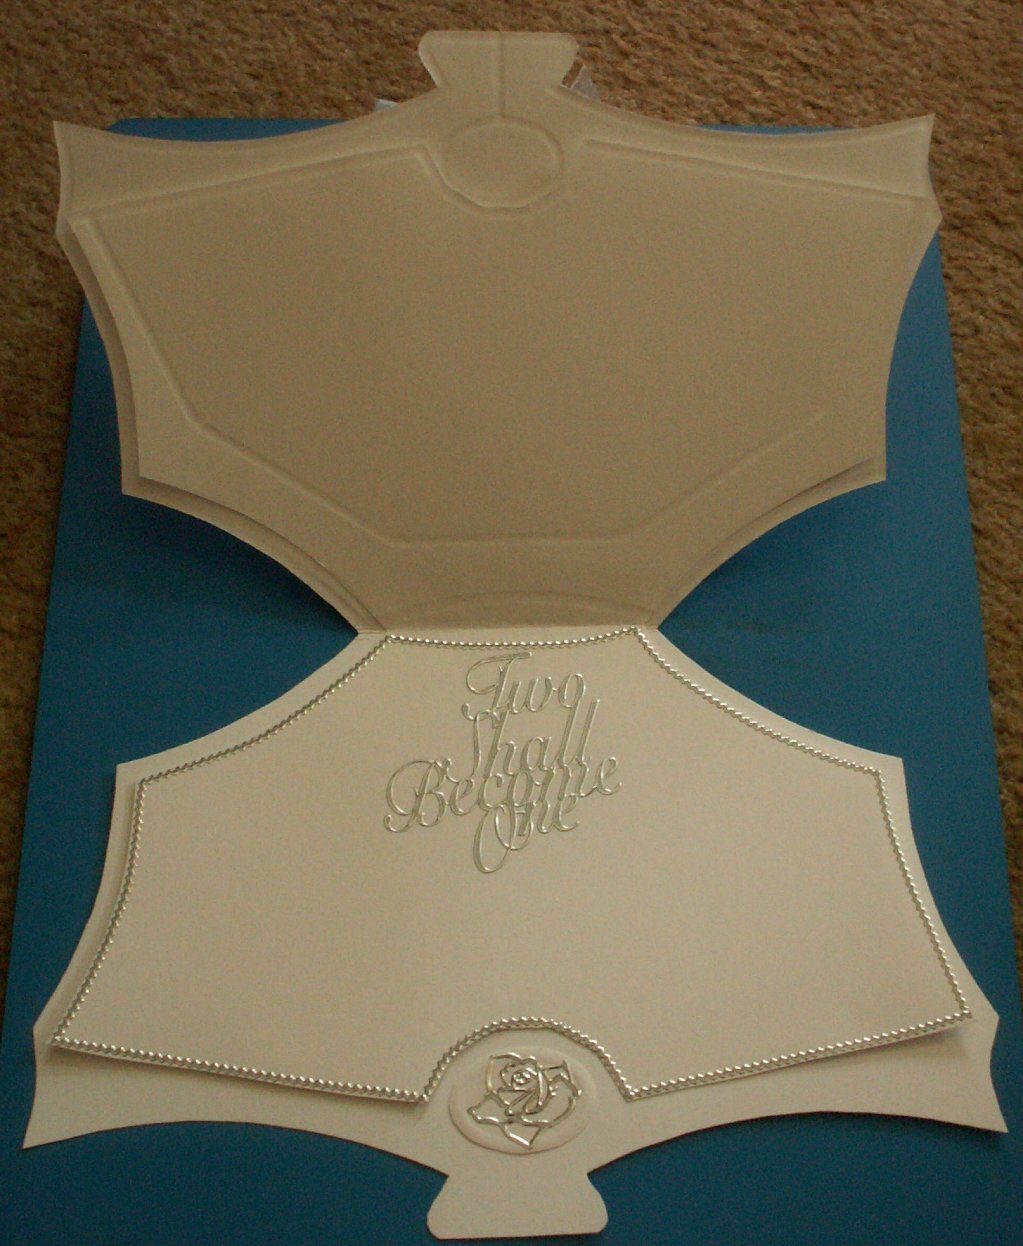 [Mike+and+Raylene+Wedding+Card+Inside+-+19+May+2007.jpg]